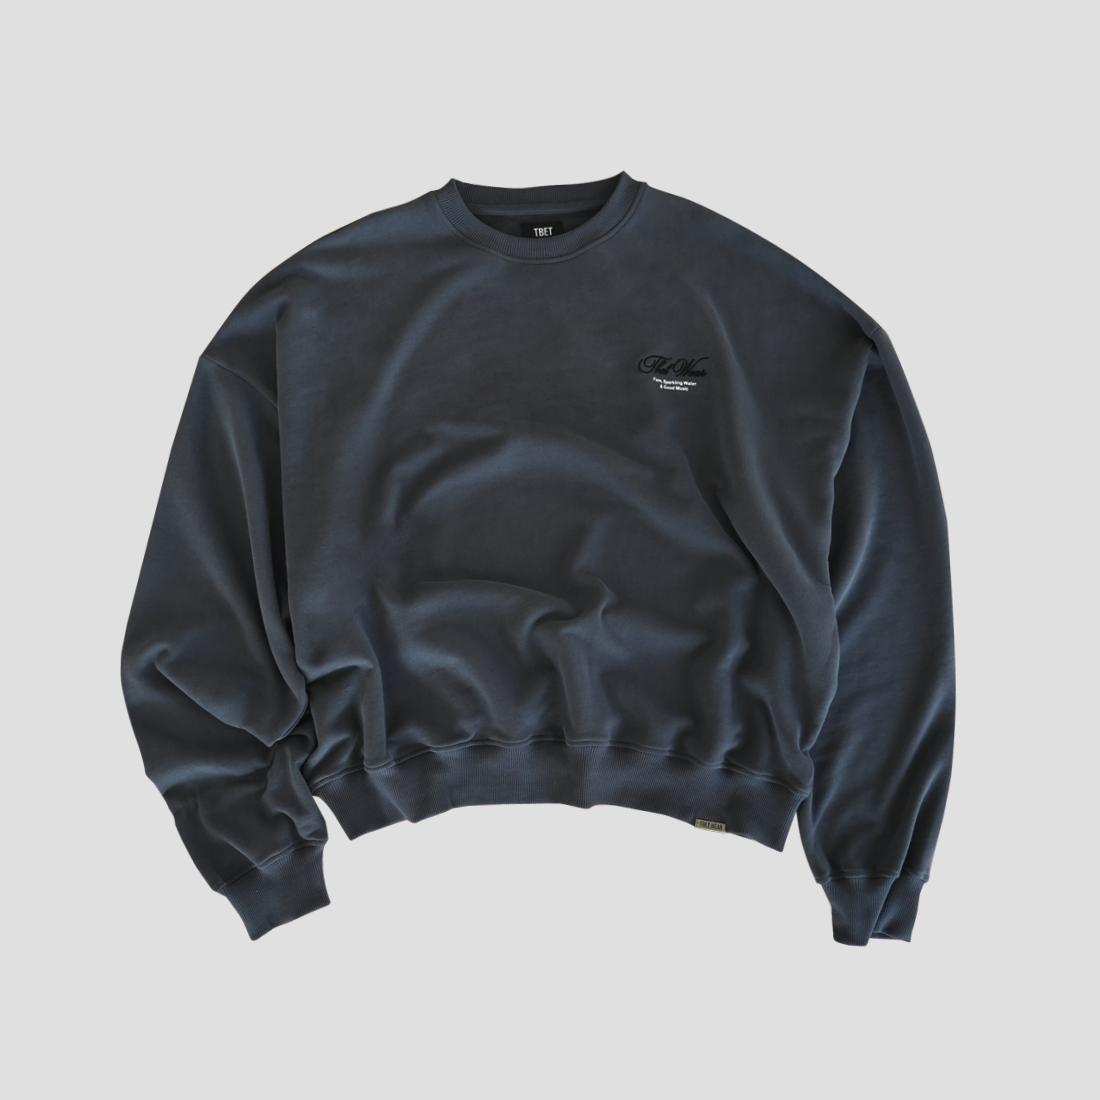 Fam Drop I Summer Sweater Oversize #1